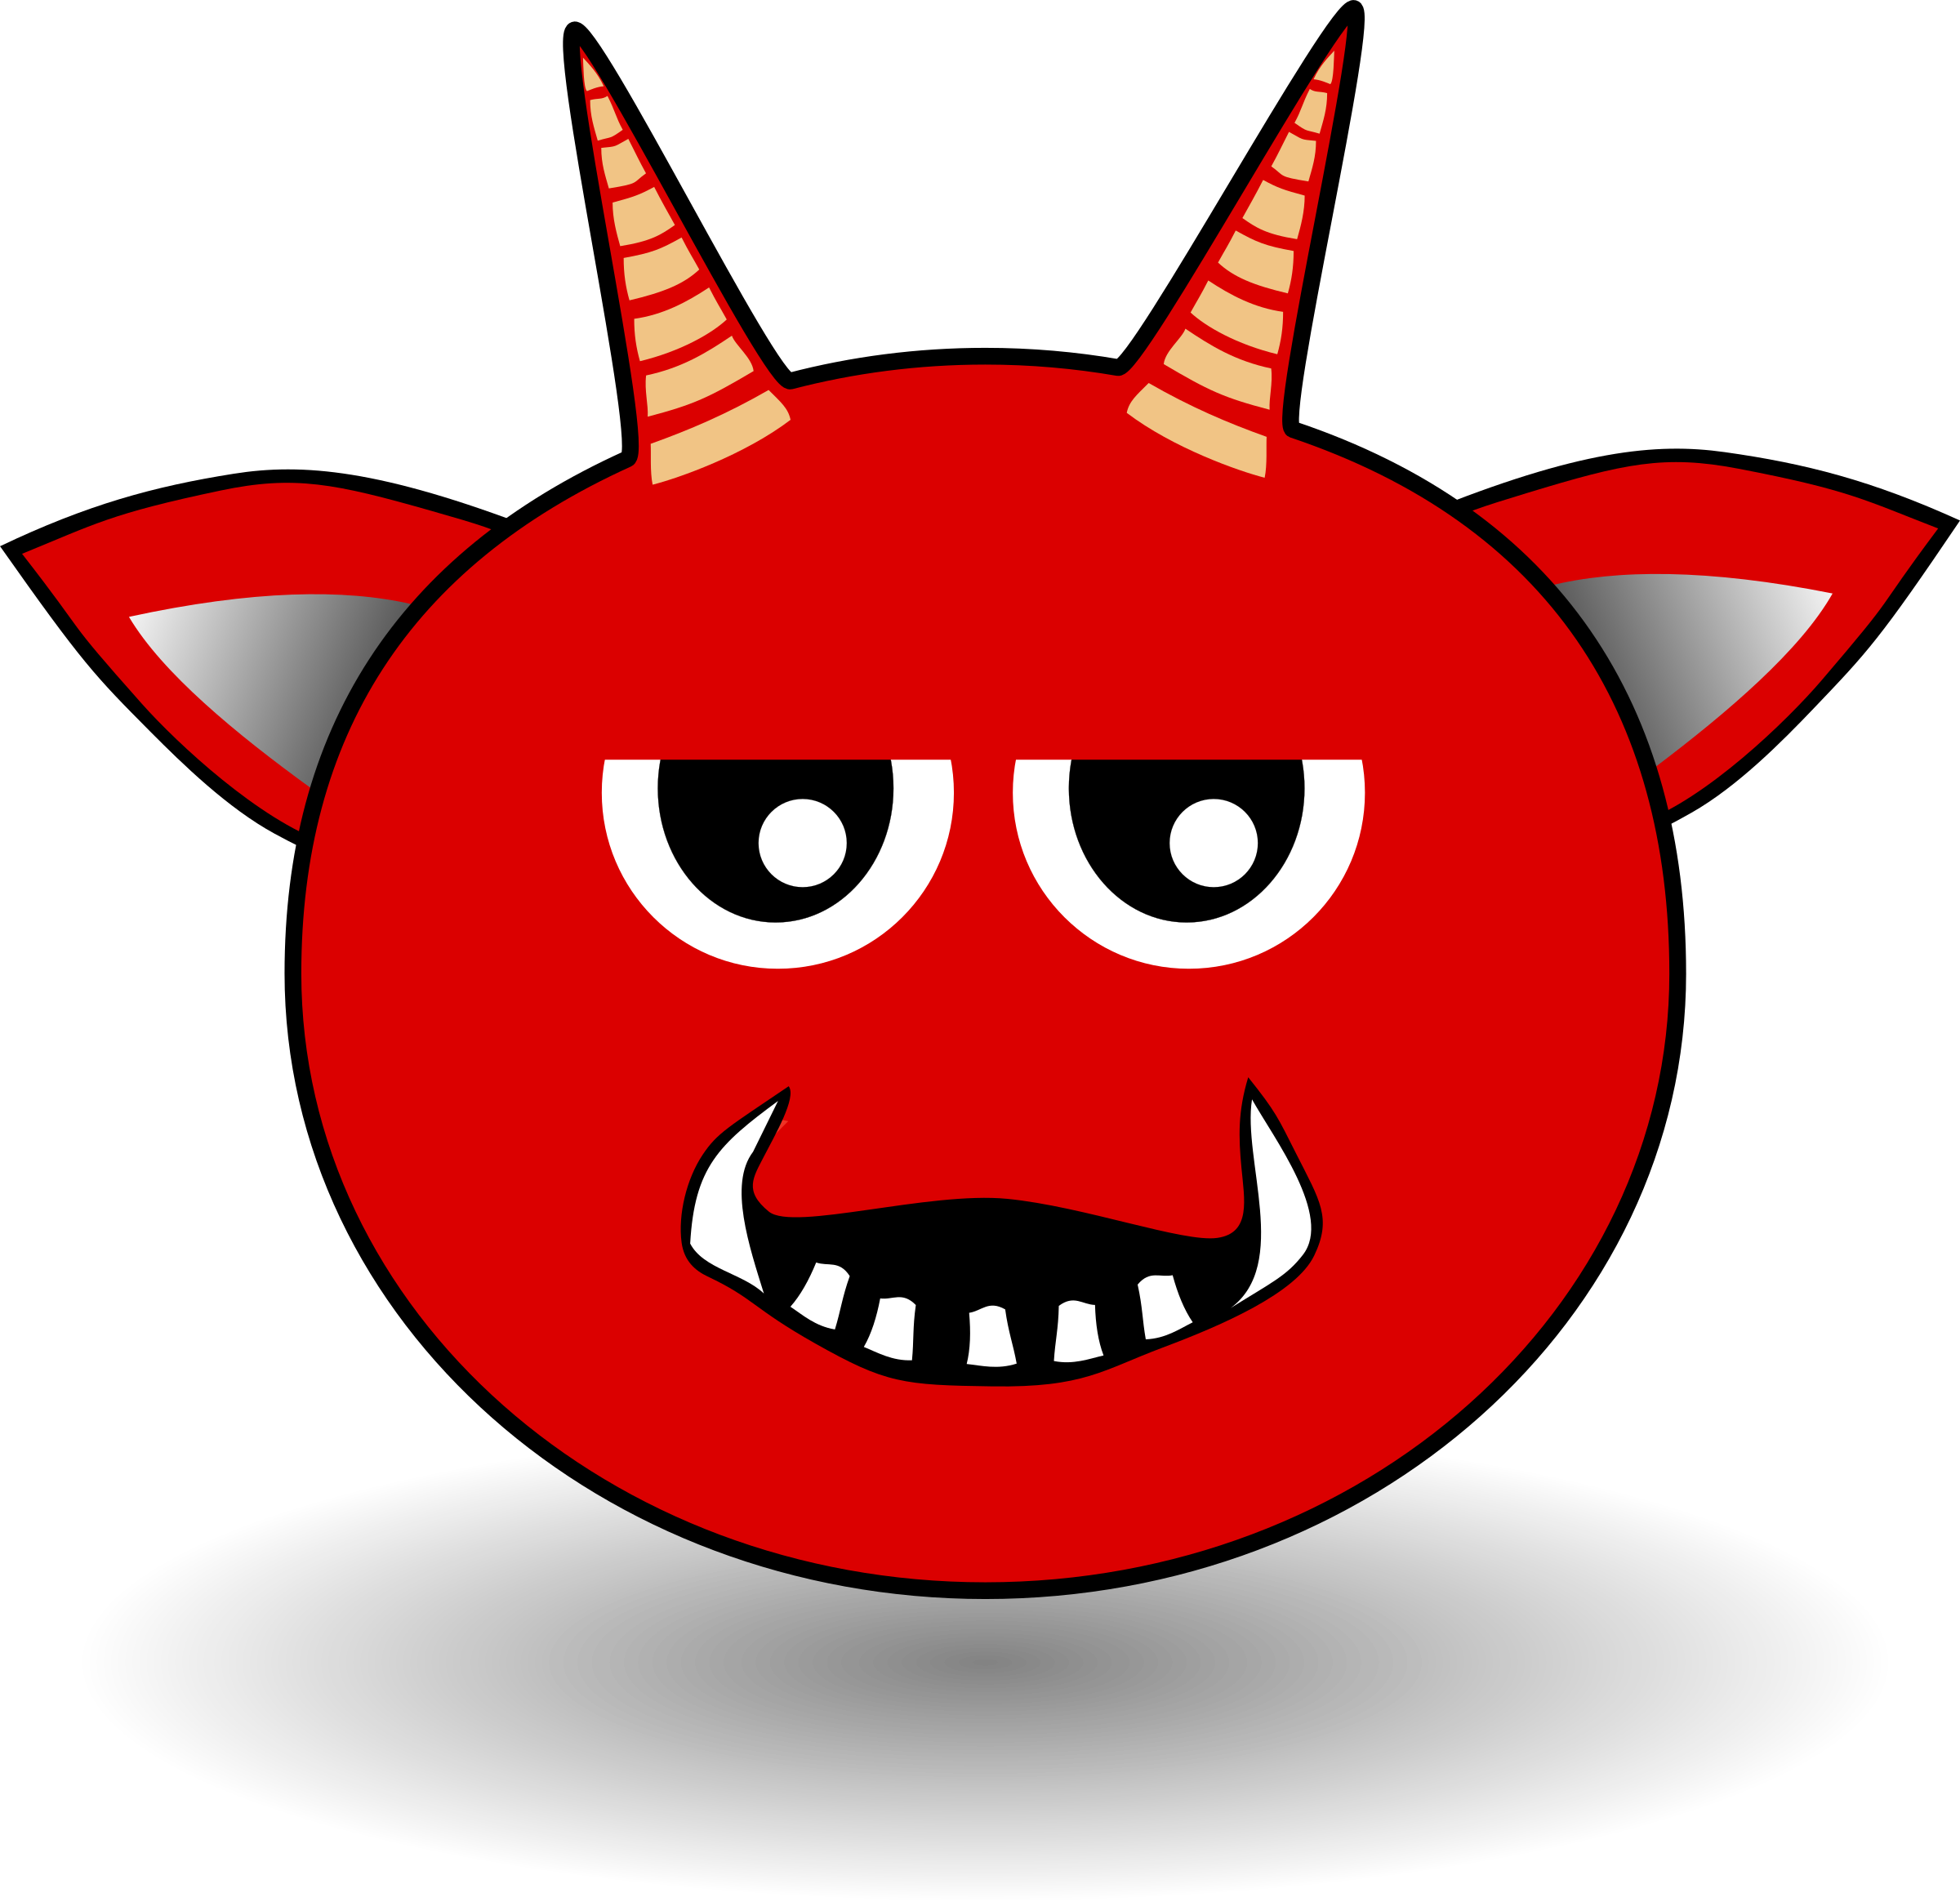 Devil repentance